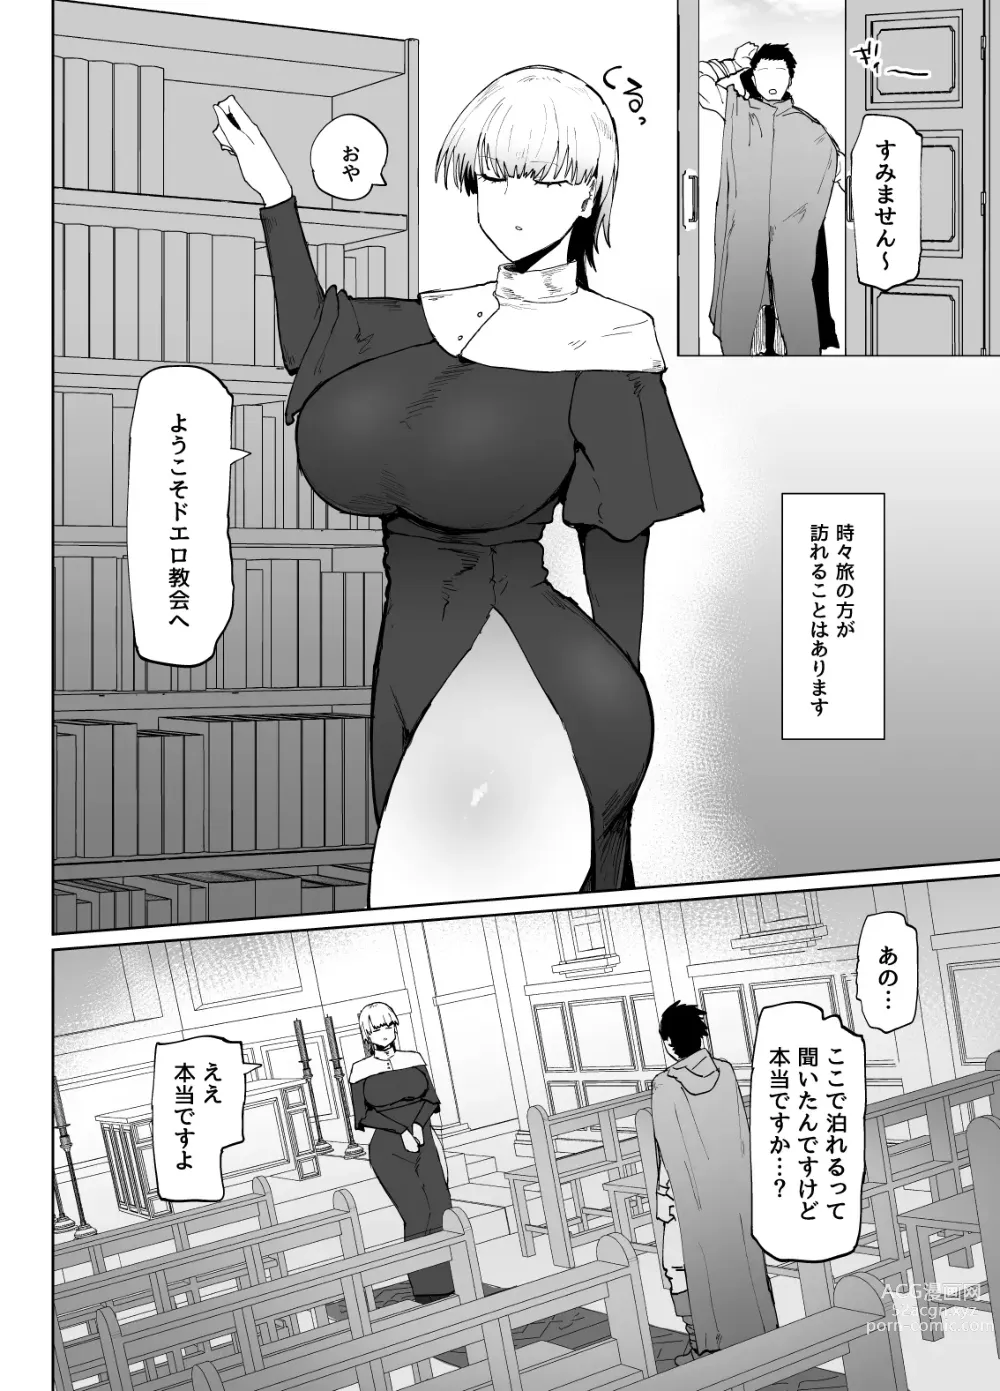 Page 3 of doujinshi 糸目でデカケツで絶対に孕まないオナホシスター